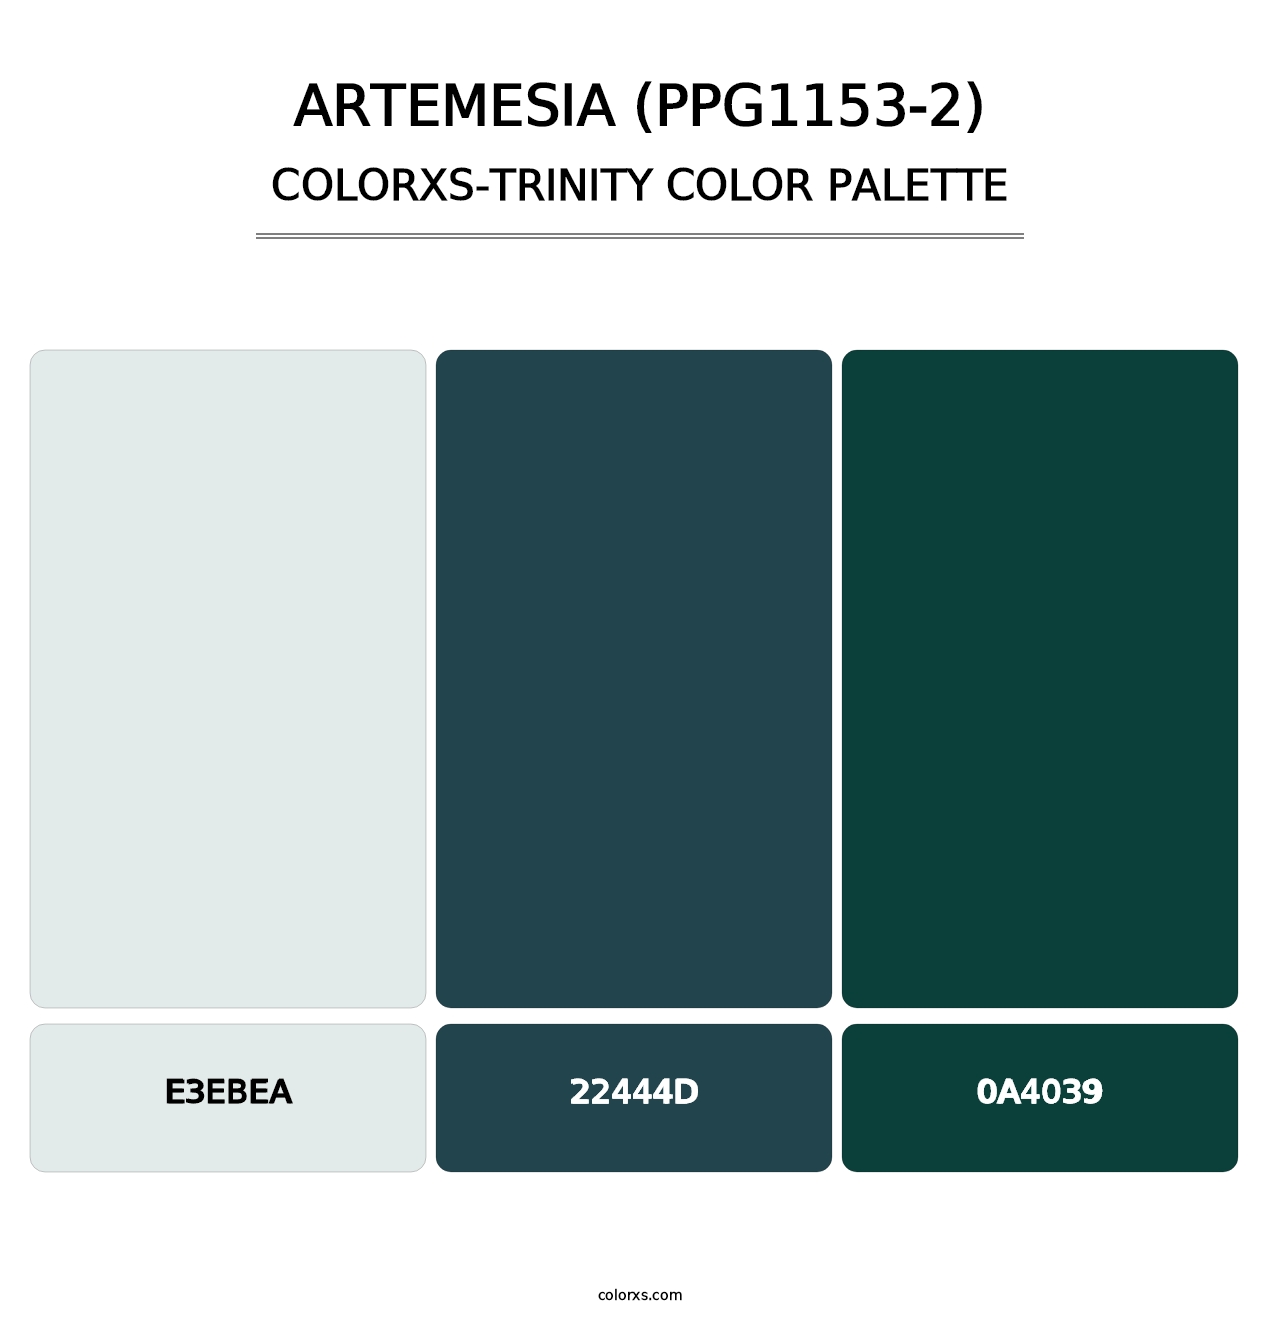 Artemesia (PPG1153-2) - Colorxs Trinity Palette